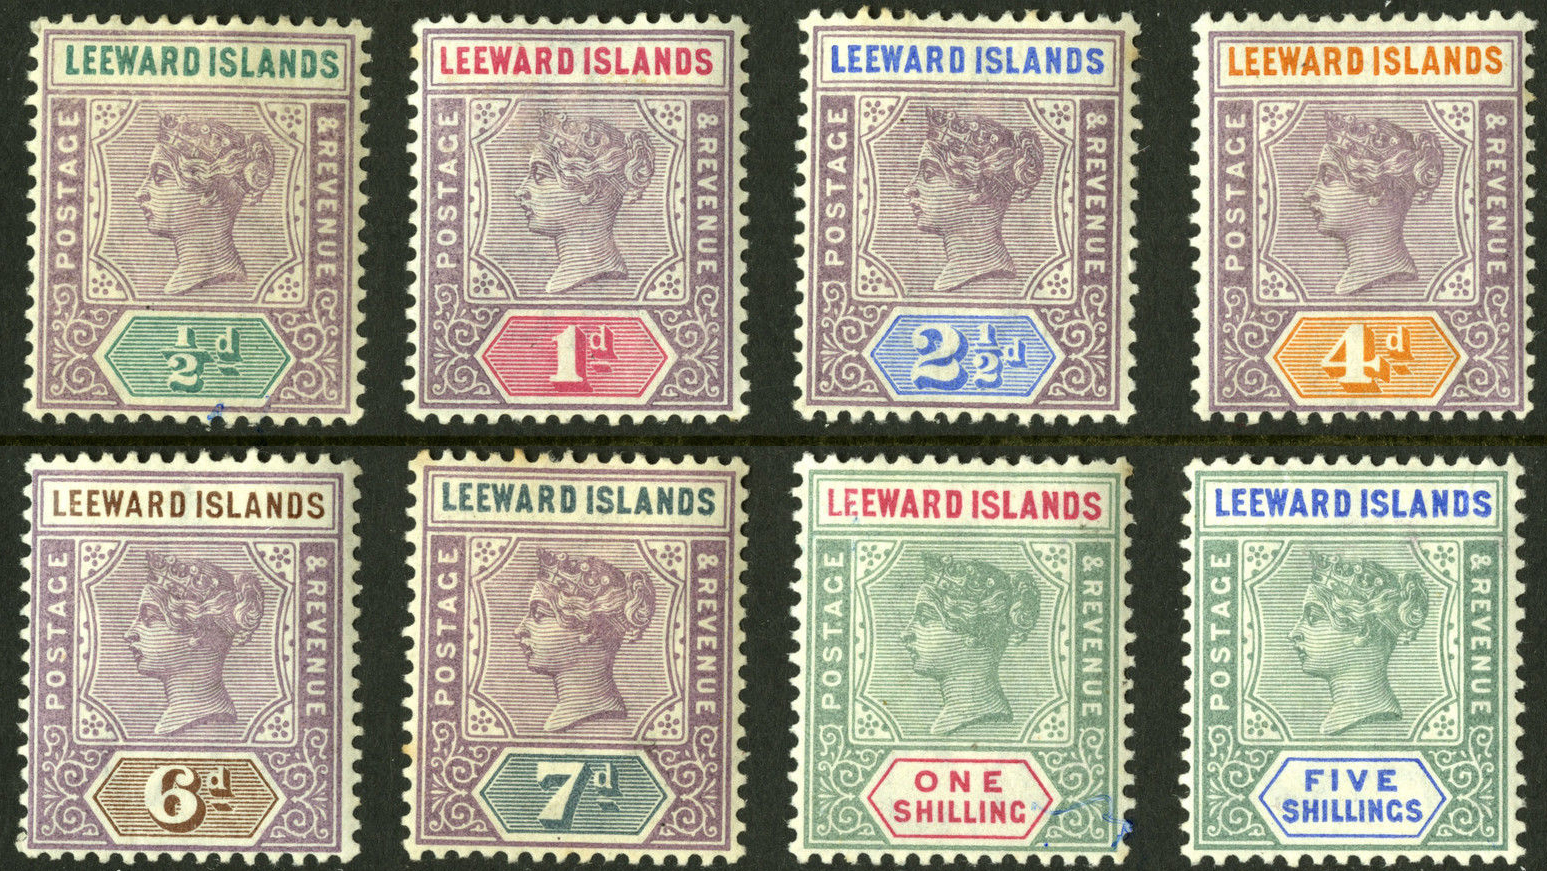 Lewward Islands Sc1 to Sc8